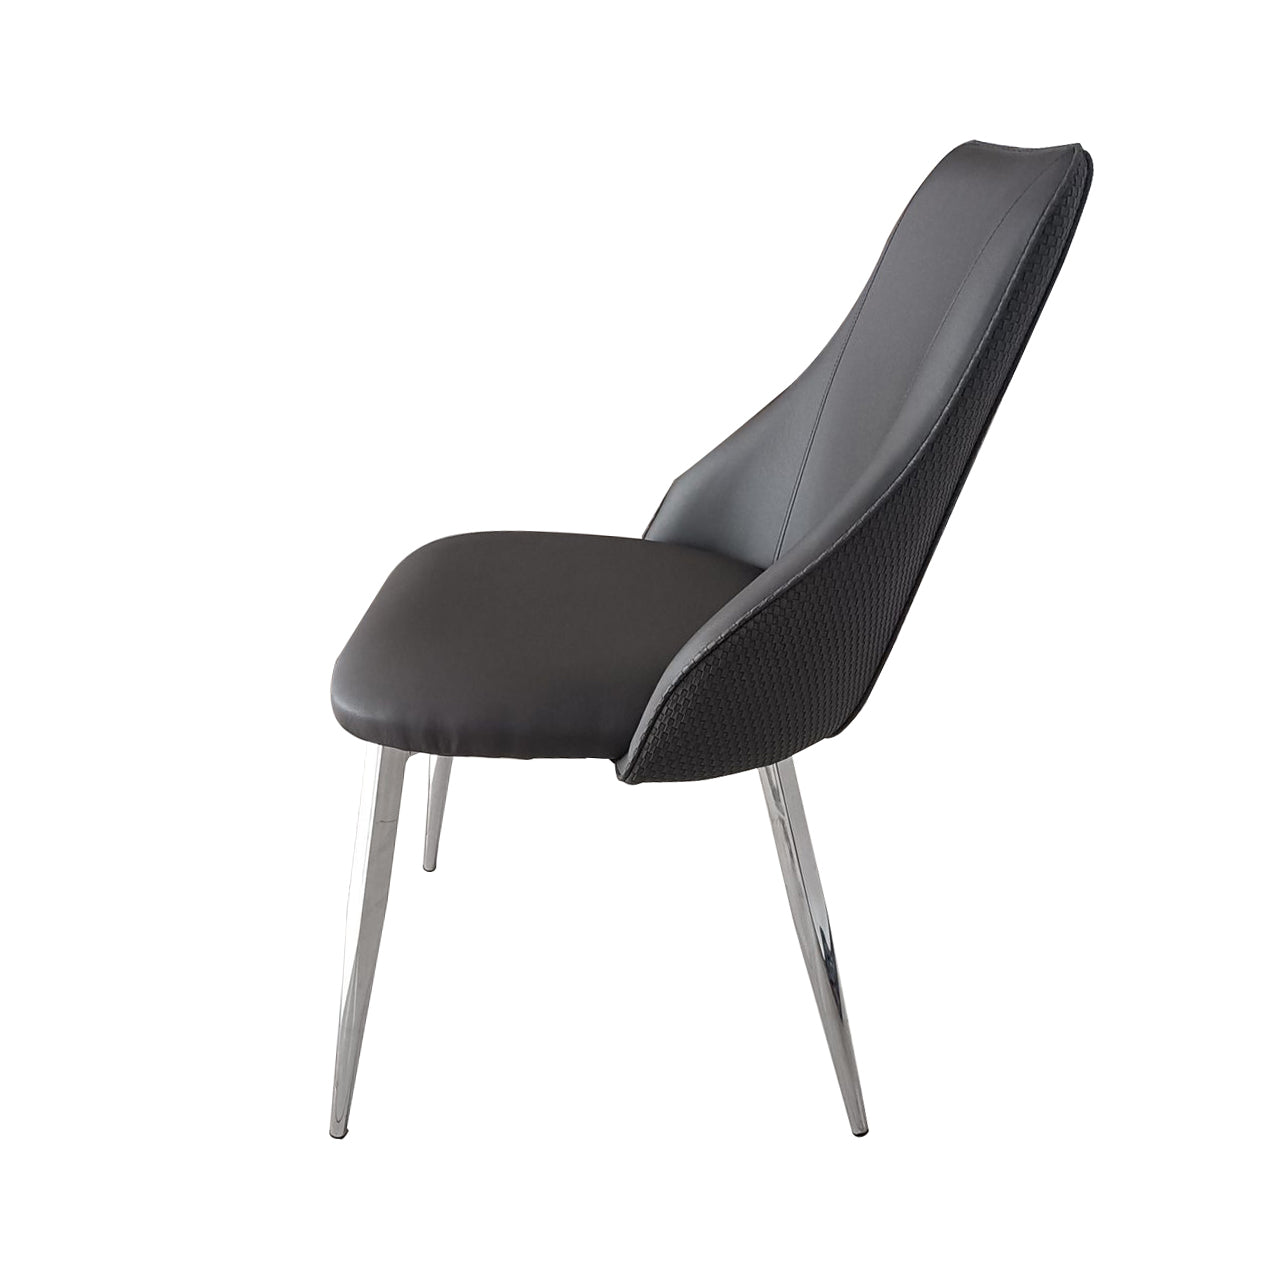 grey pu leather chair